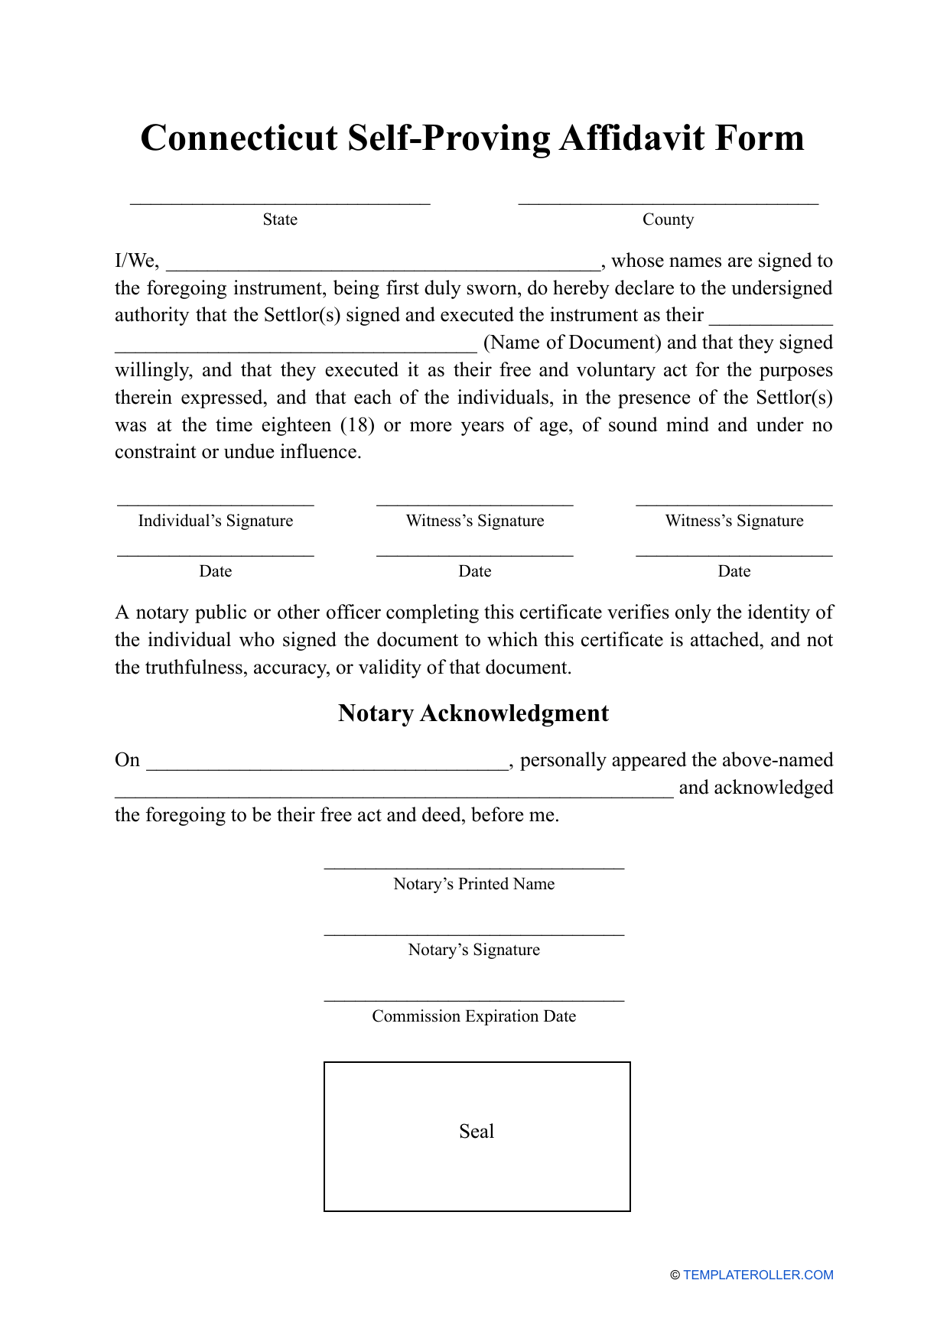 Self-proving Affidavit Form - Connecticut, Page 1